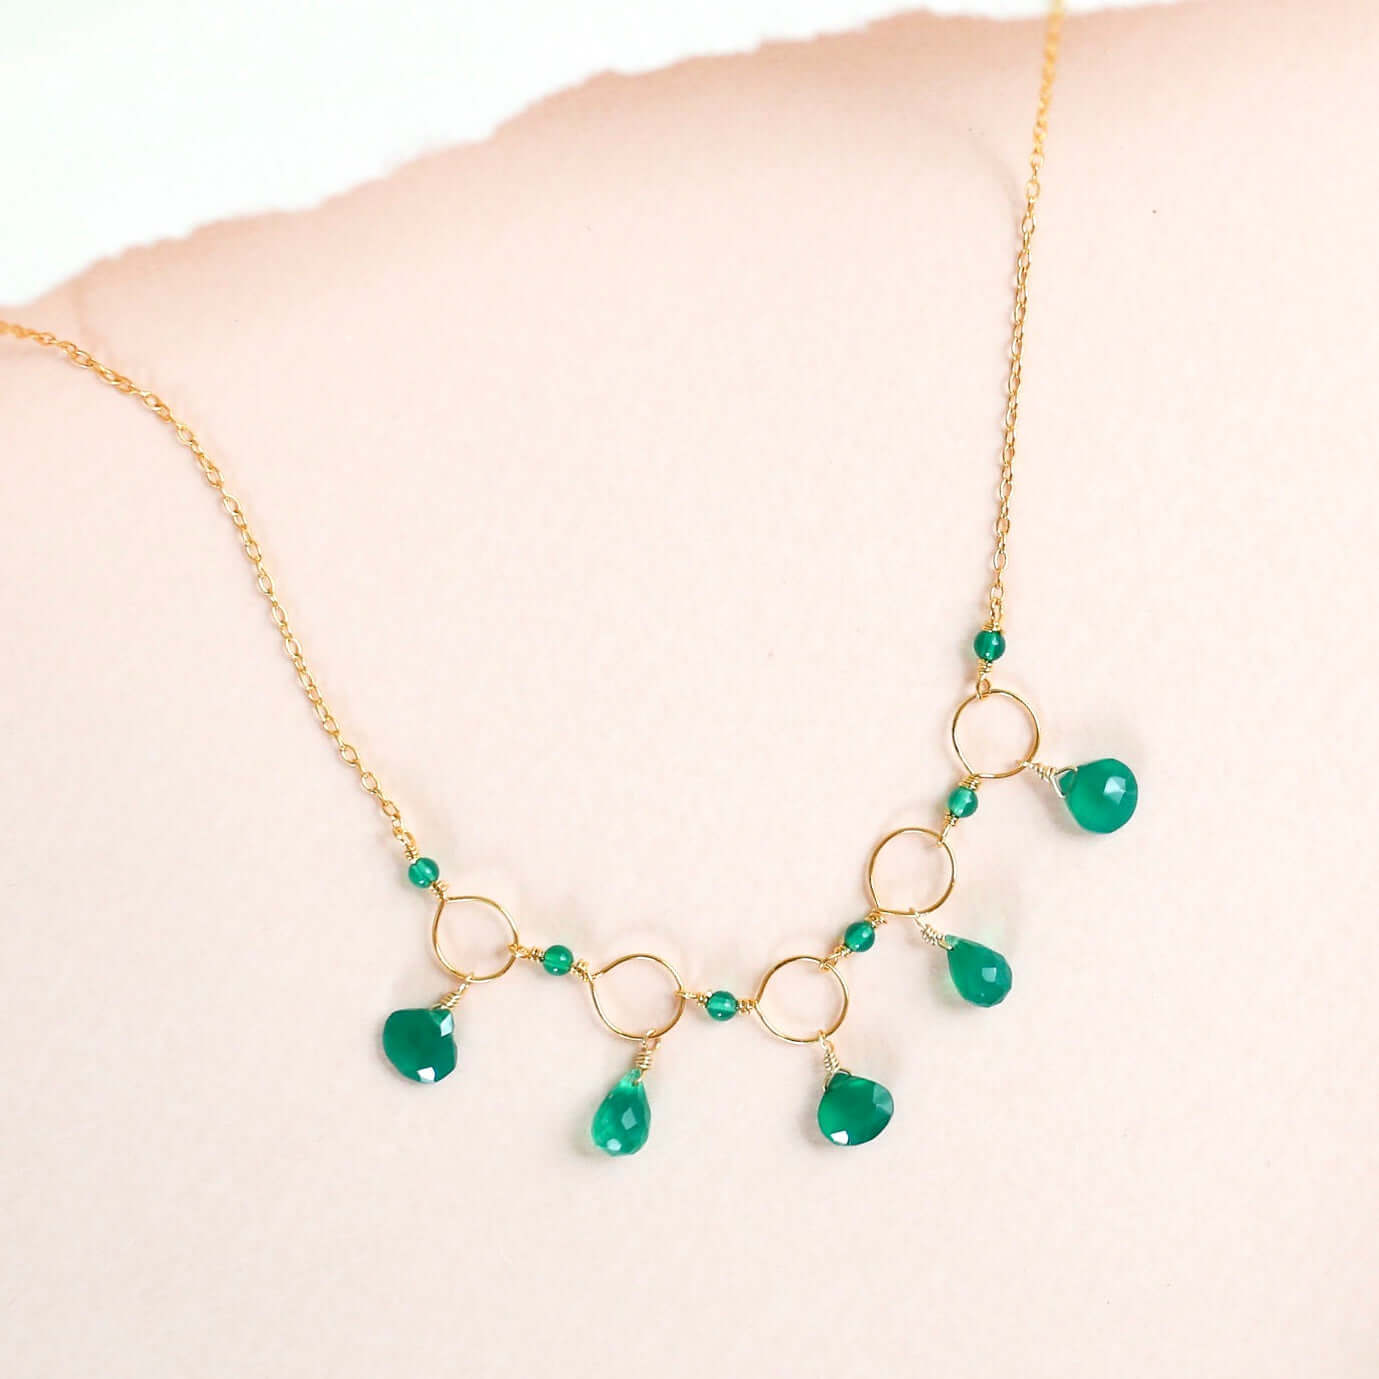 Adjustable Green Onyx Gemstone Chain Necklace